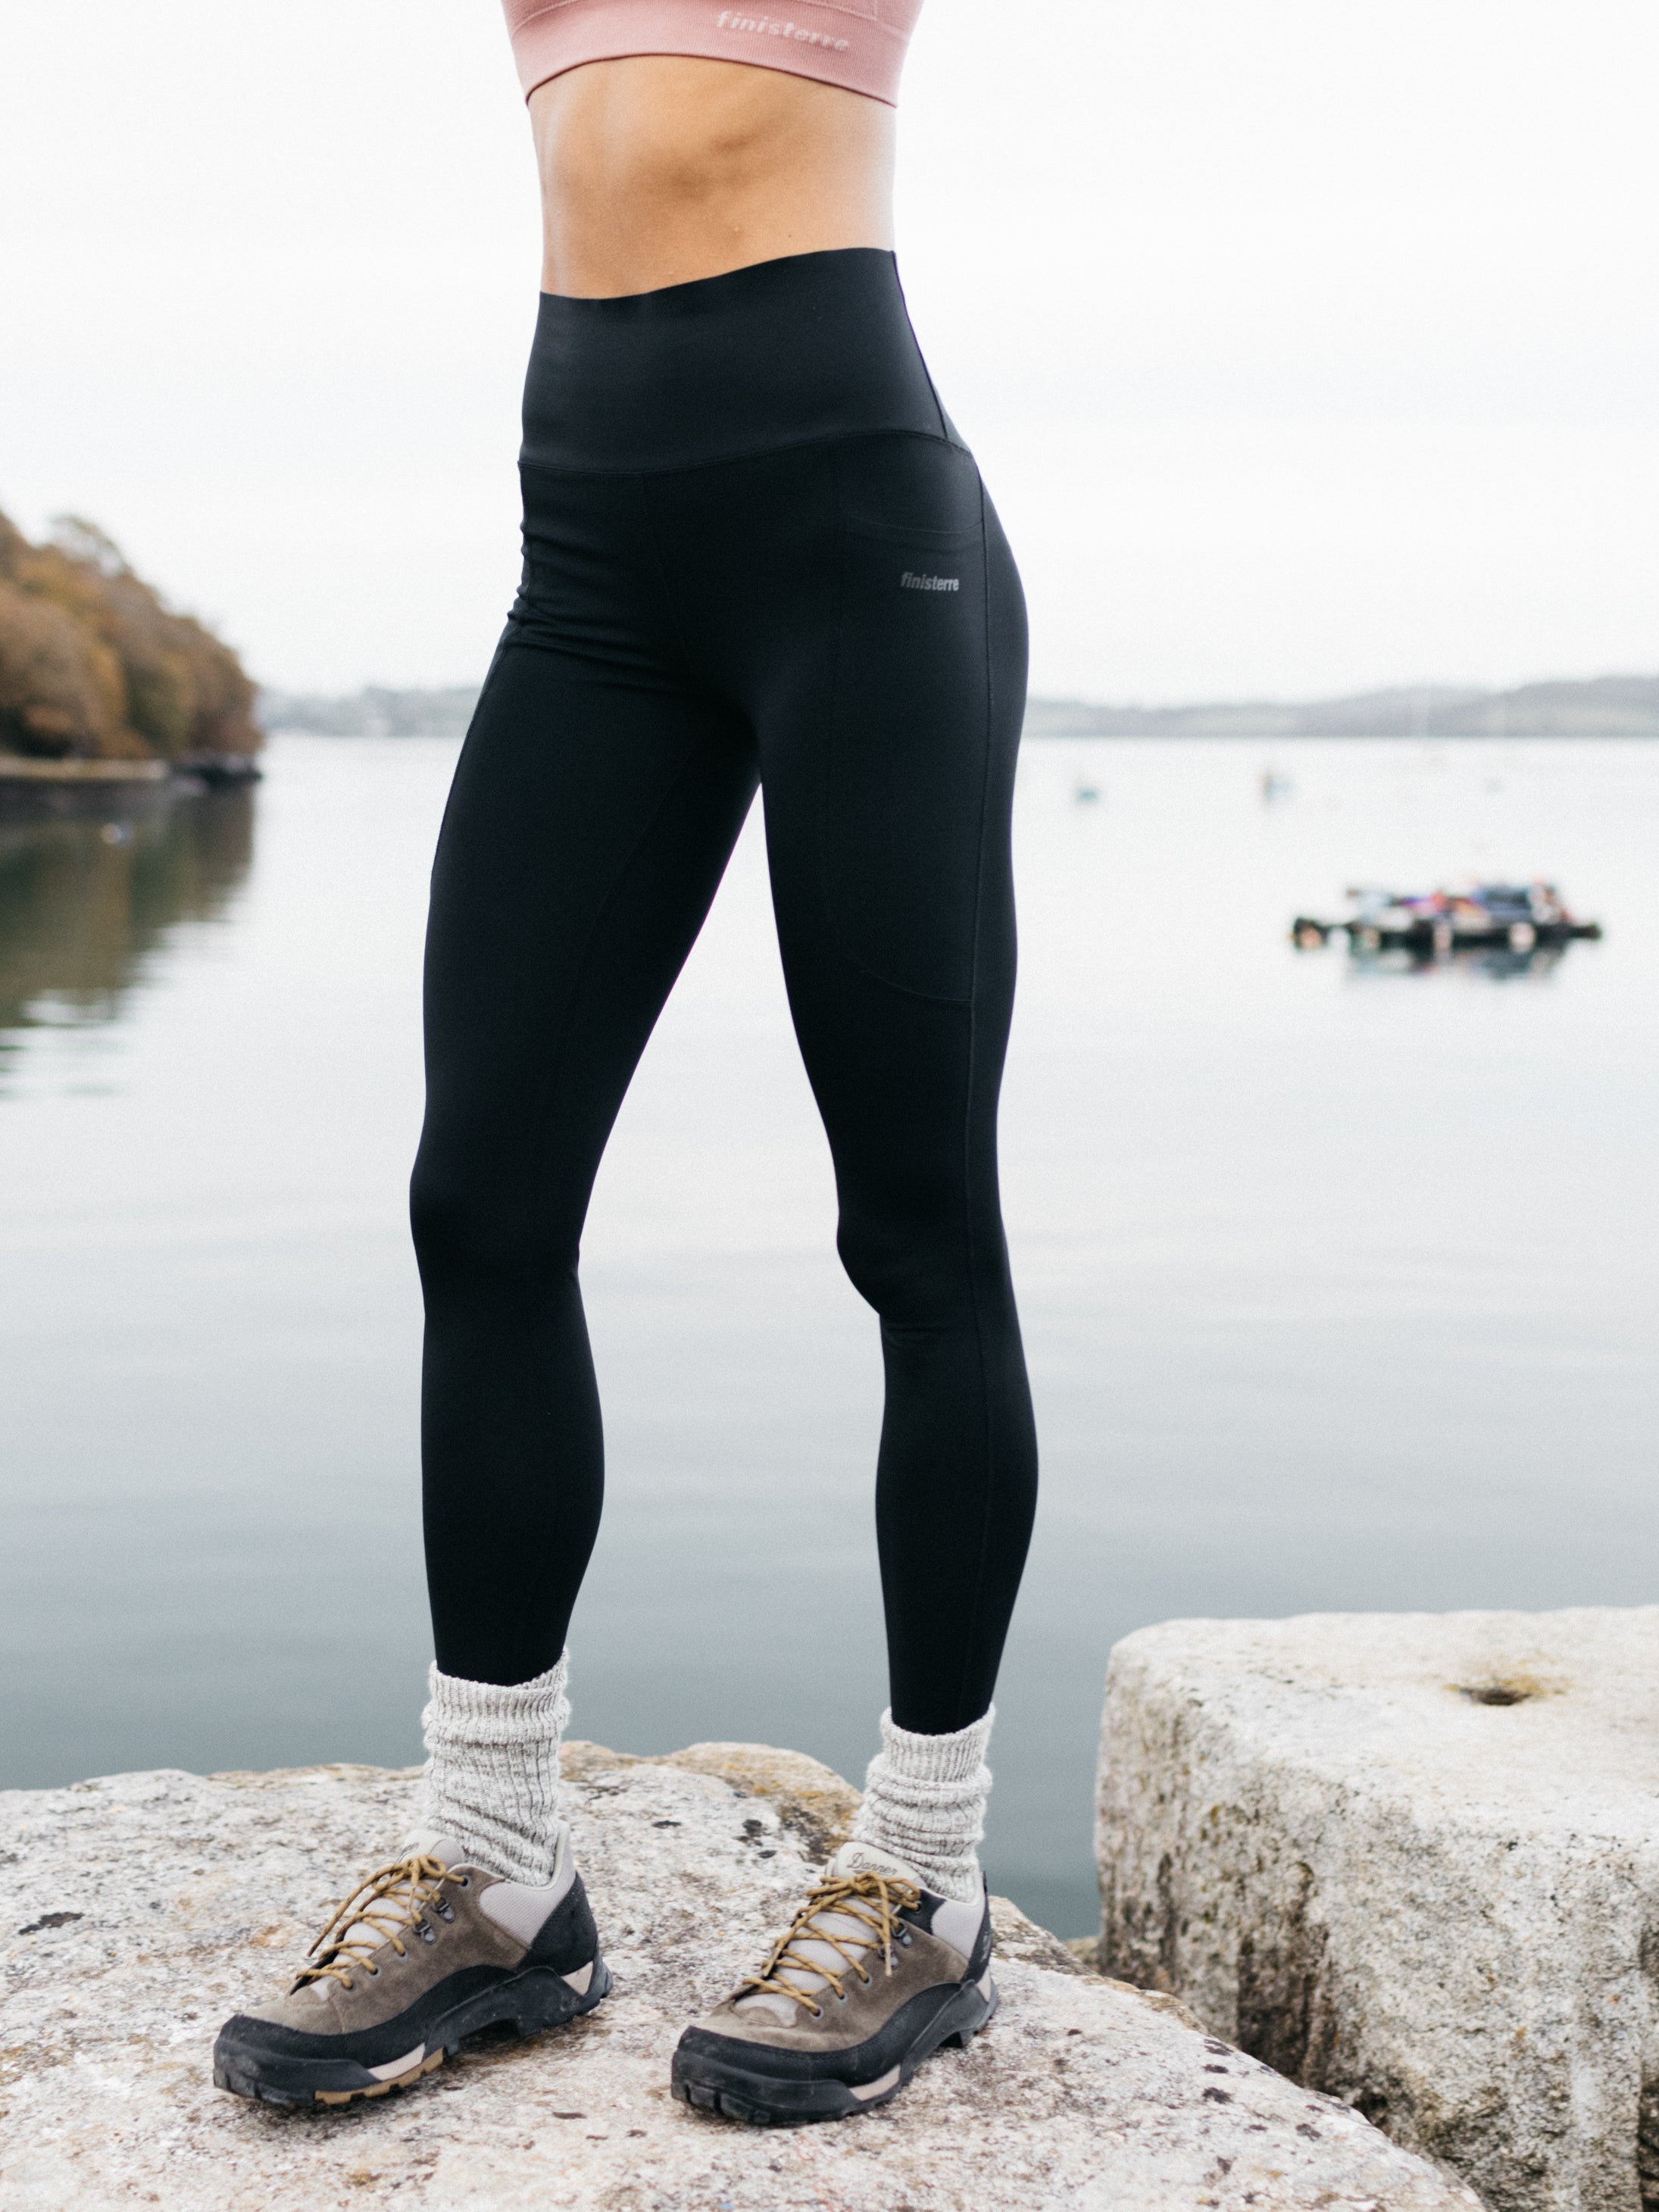 Women's Zennor Adventure Legging in Black